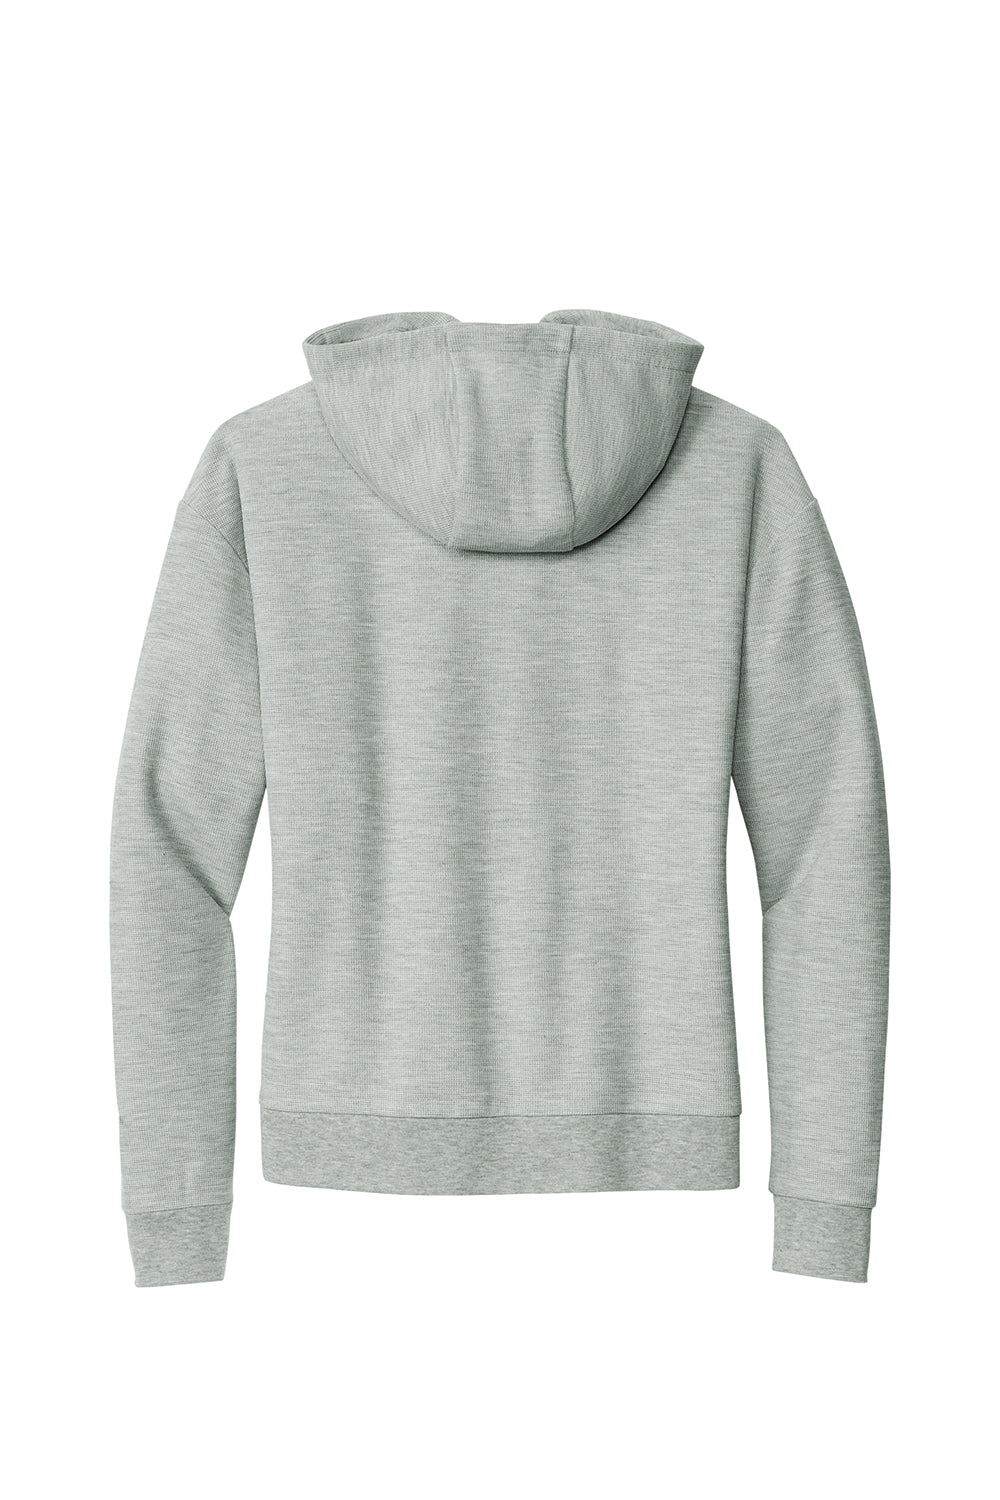 Ogio LOG162 Womens Revive Hooded Sweatshirt Hoodie Heather Light Grey Flat Back